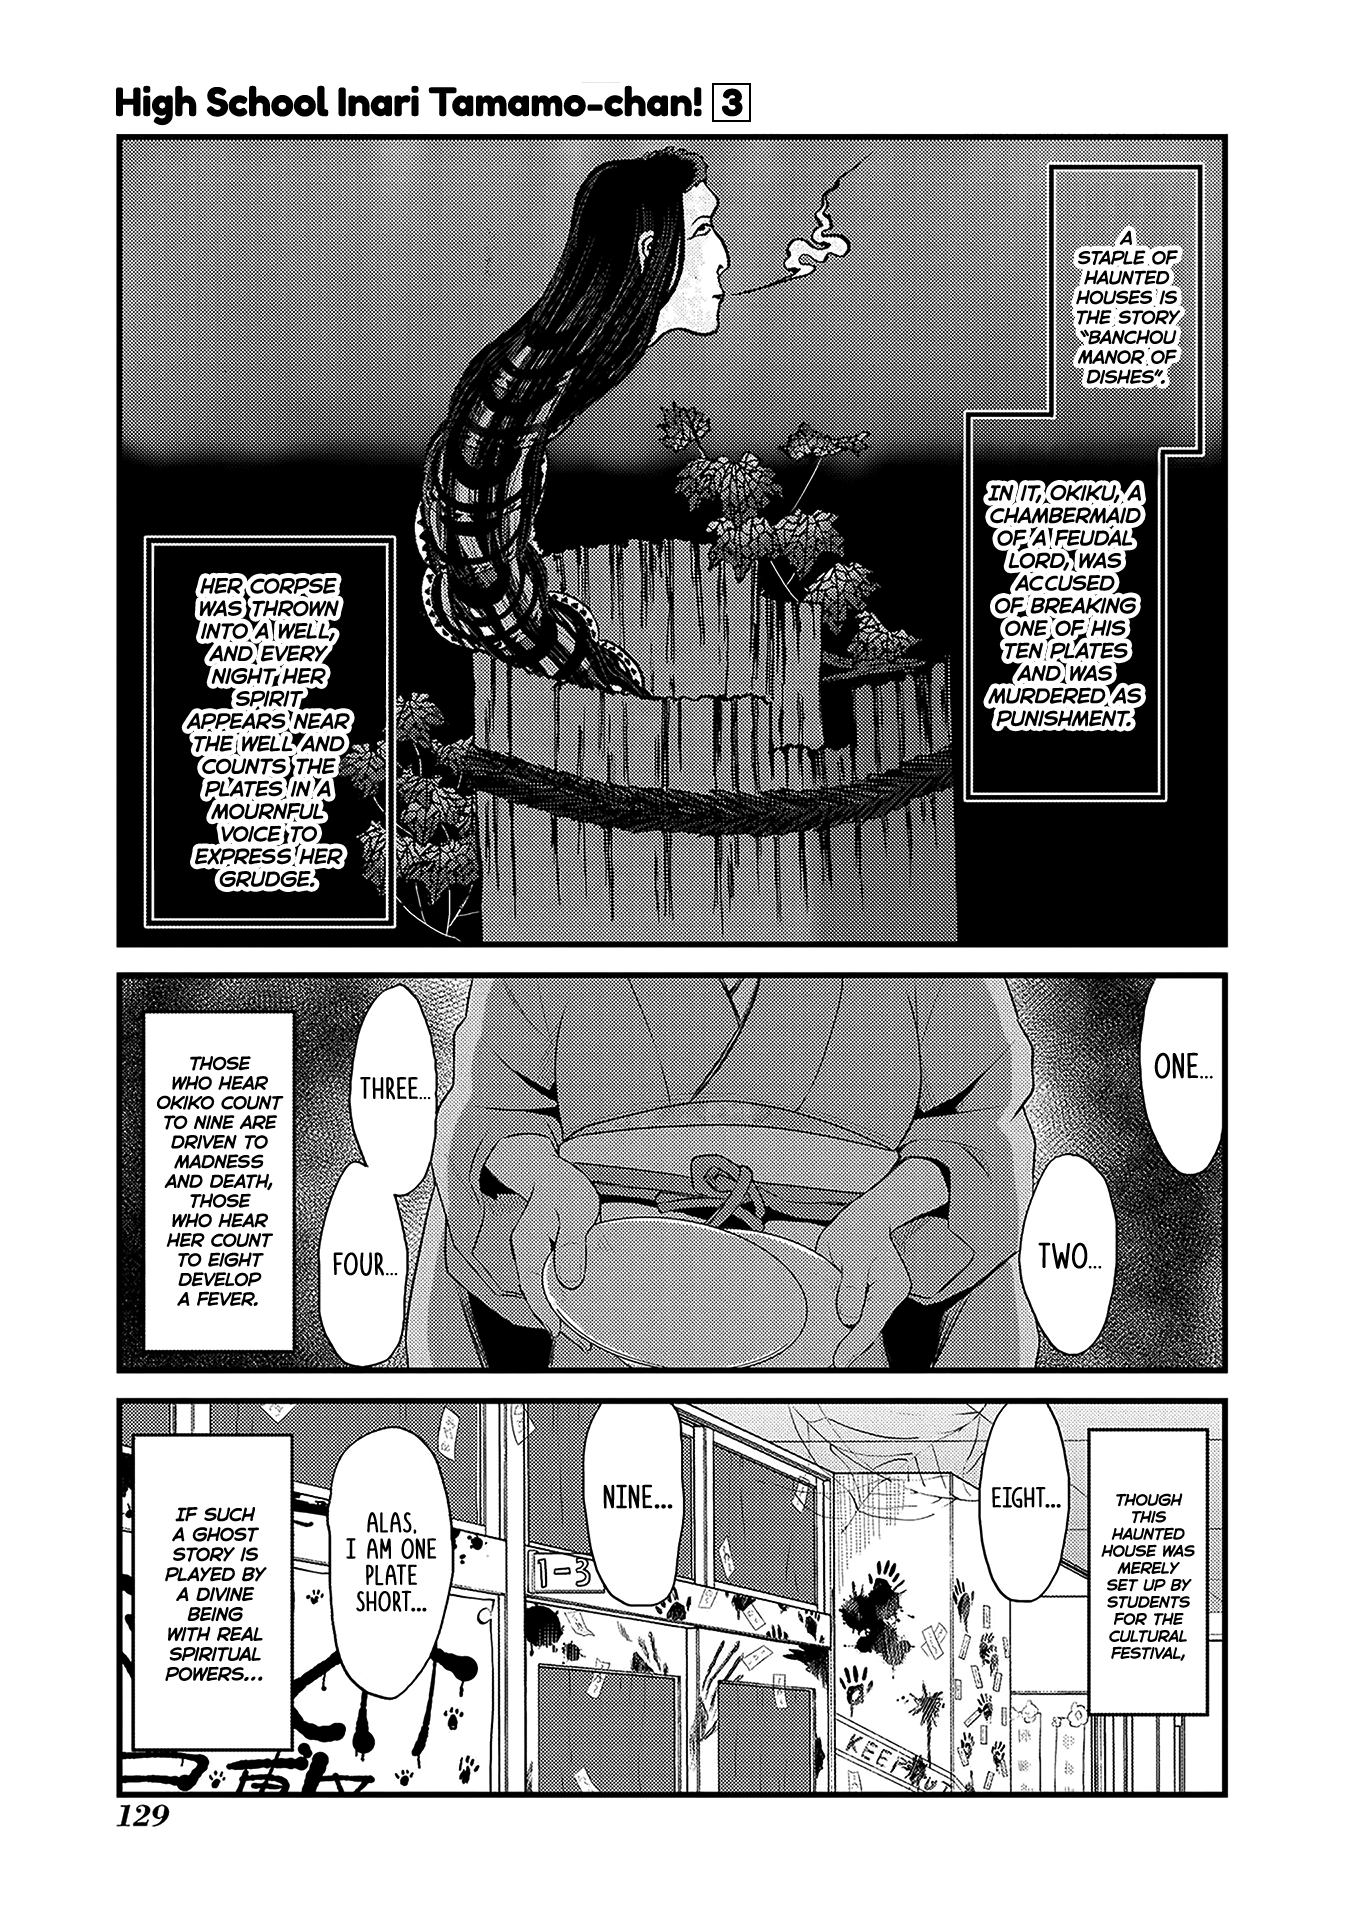 High School Inari Tamamo-Chan! Chapter 46 #1